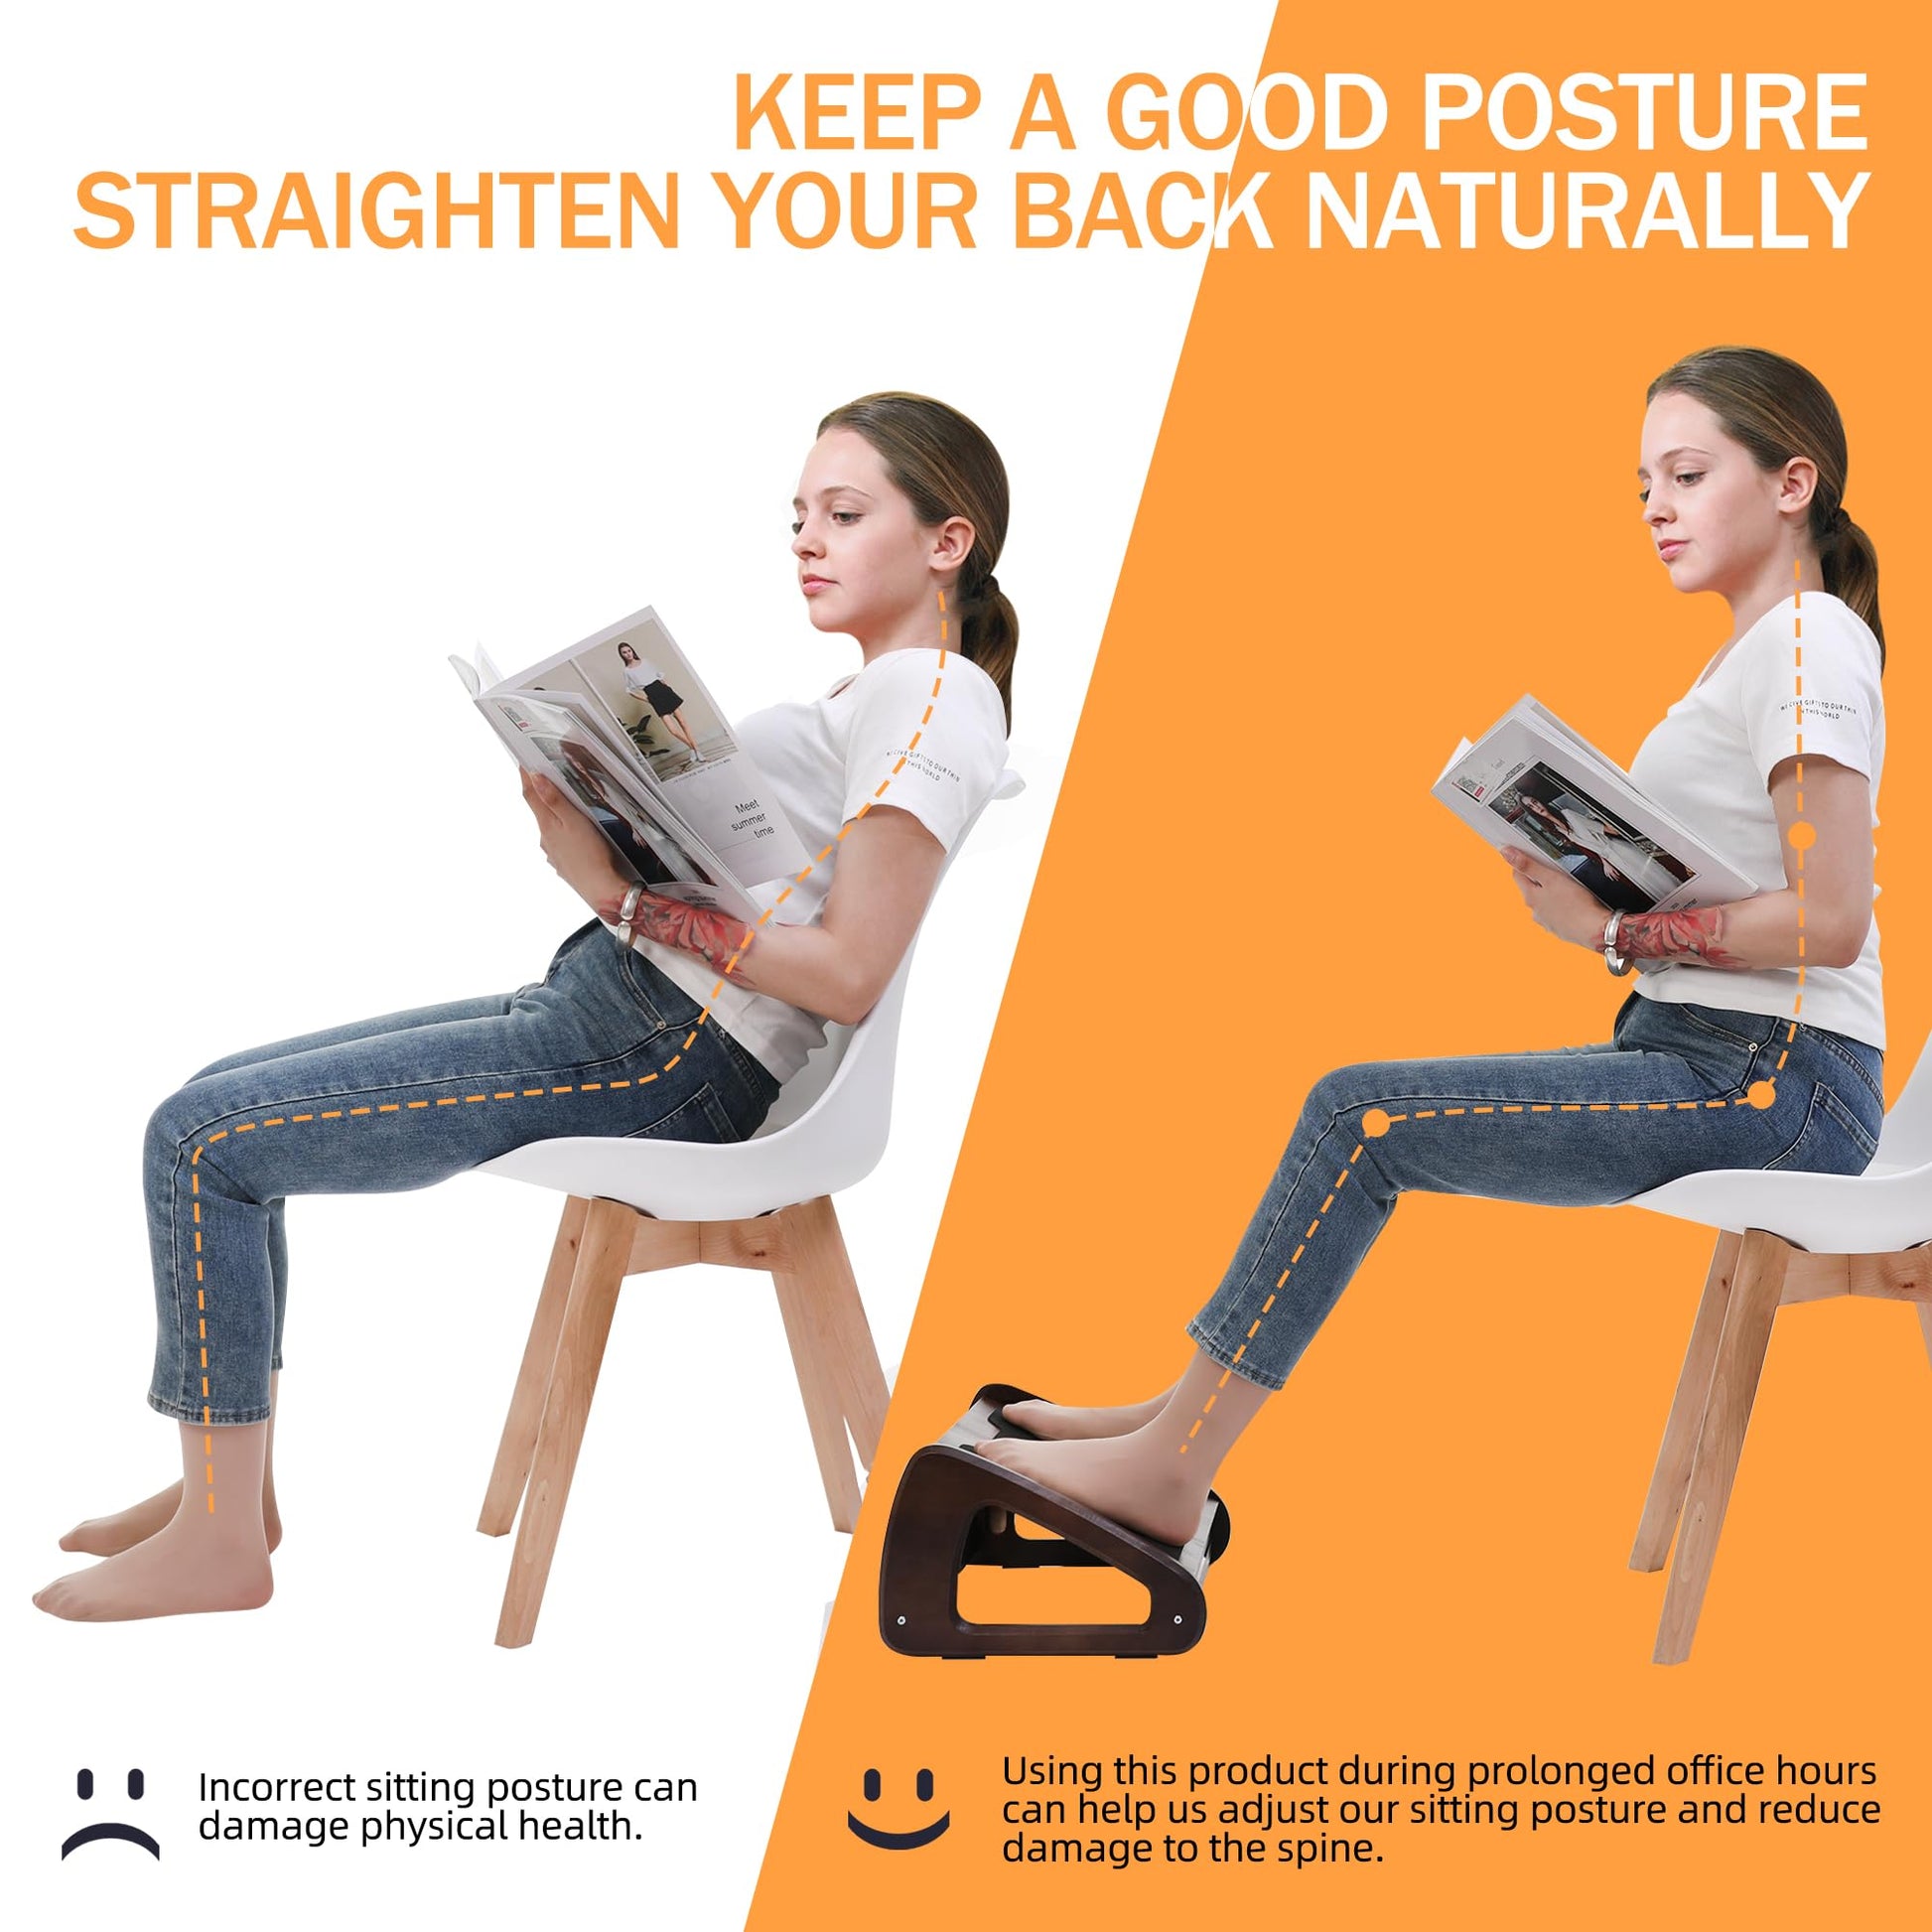 Fanwer Adjustable Foot Rest for Under Desk at Work, Ergonomic Foot Stool  Under Desk with 4 Height Position, Wooden Under Desk Footrest with  Anti-Slip